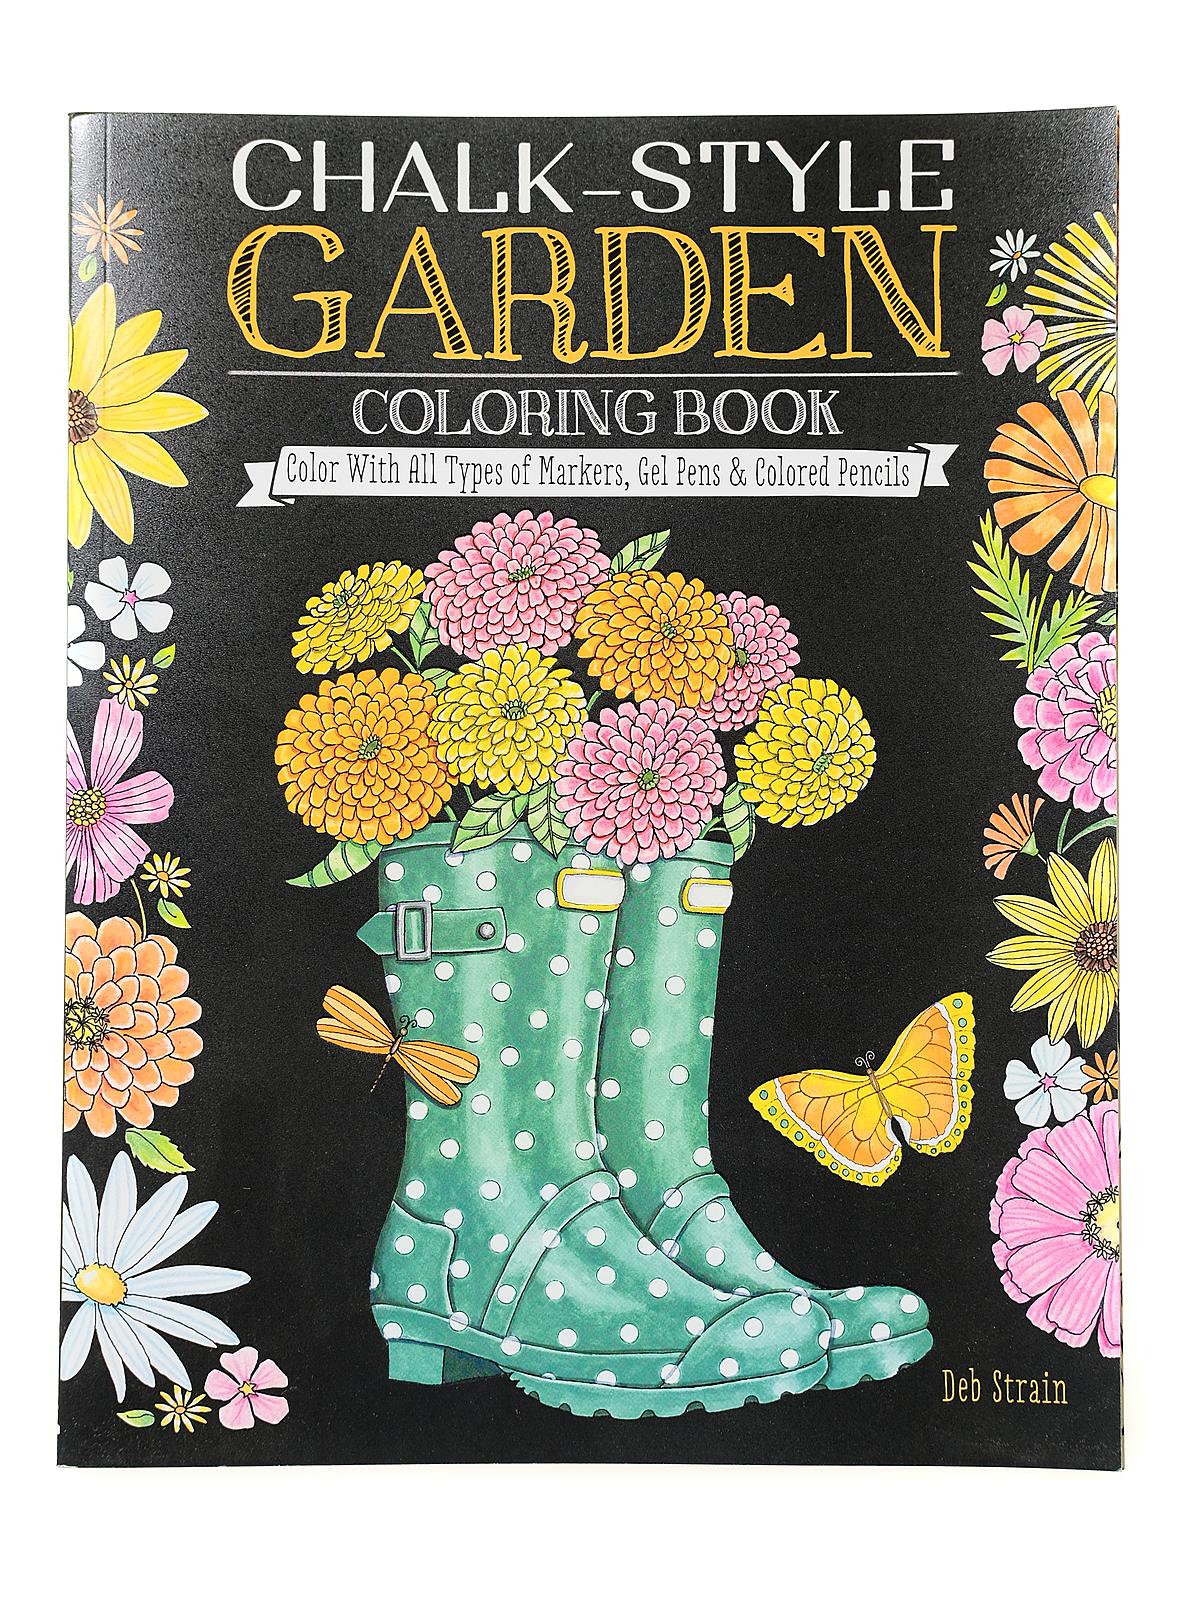 Chalk-style Coloring Garden